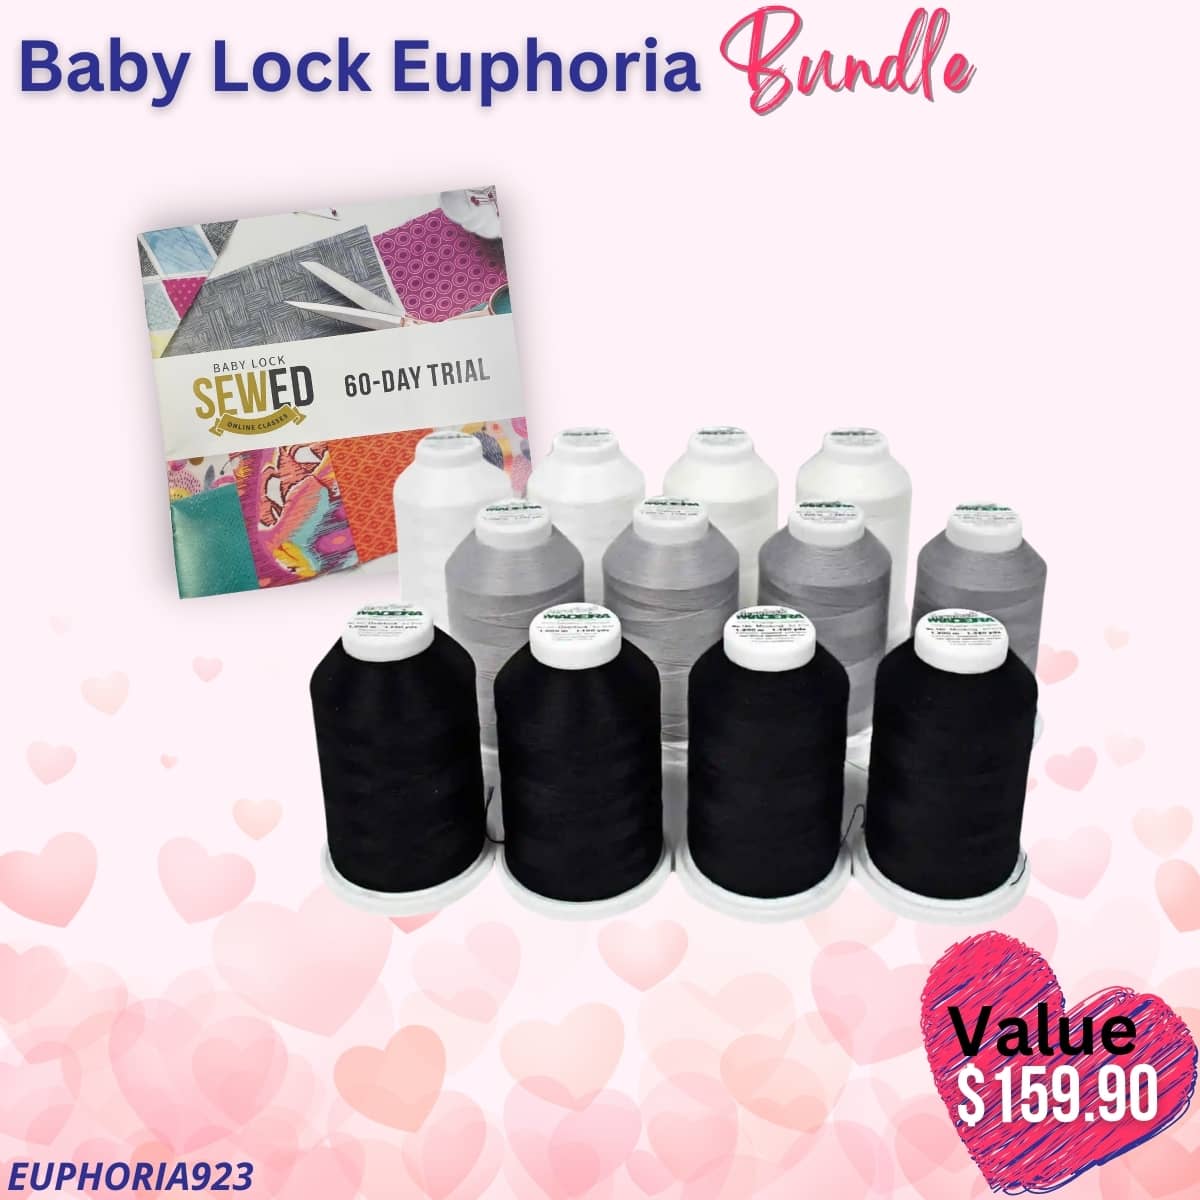 Baby Lock Euphoria bundle for Valentine's Sale